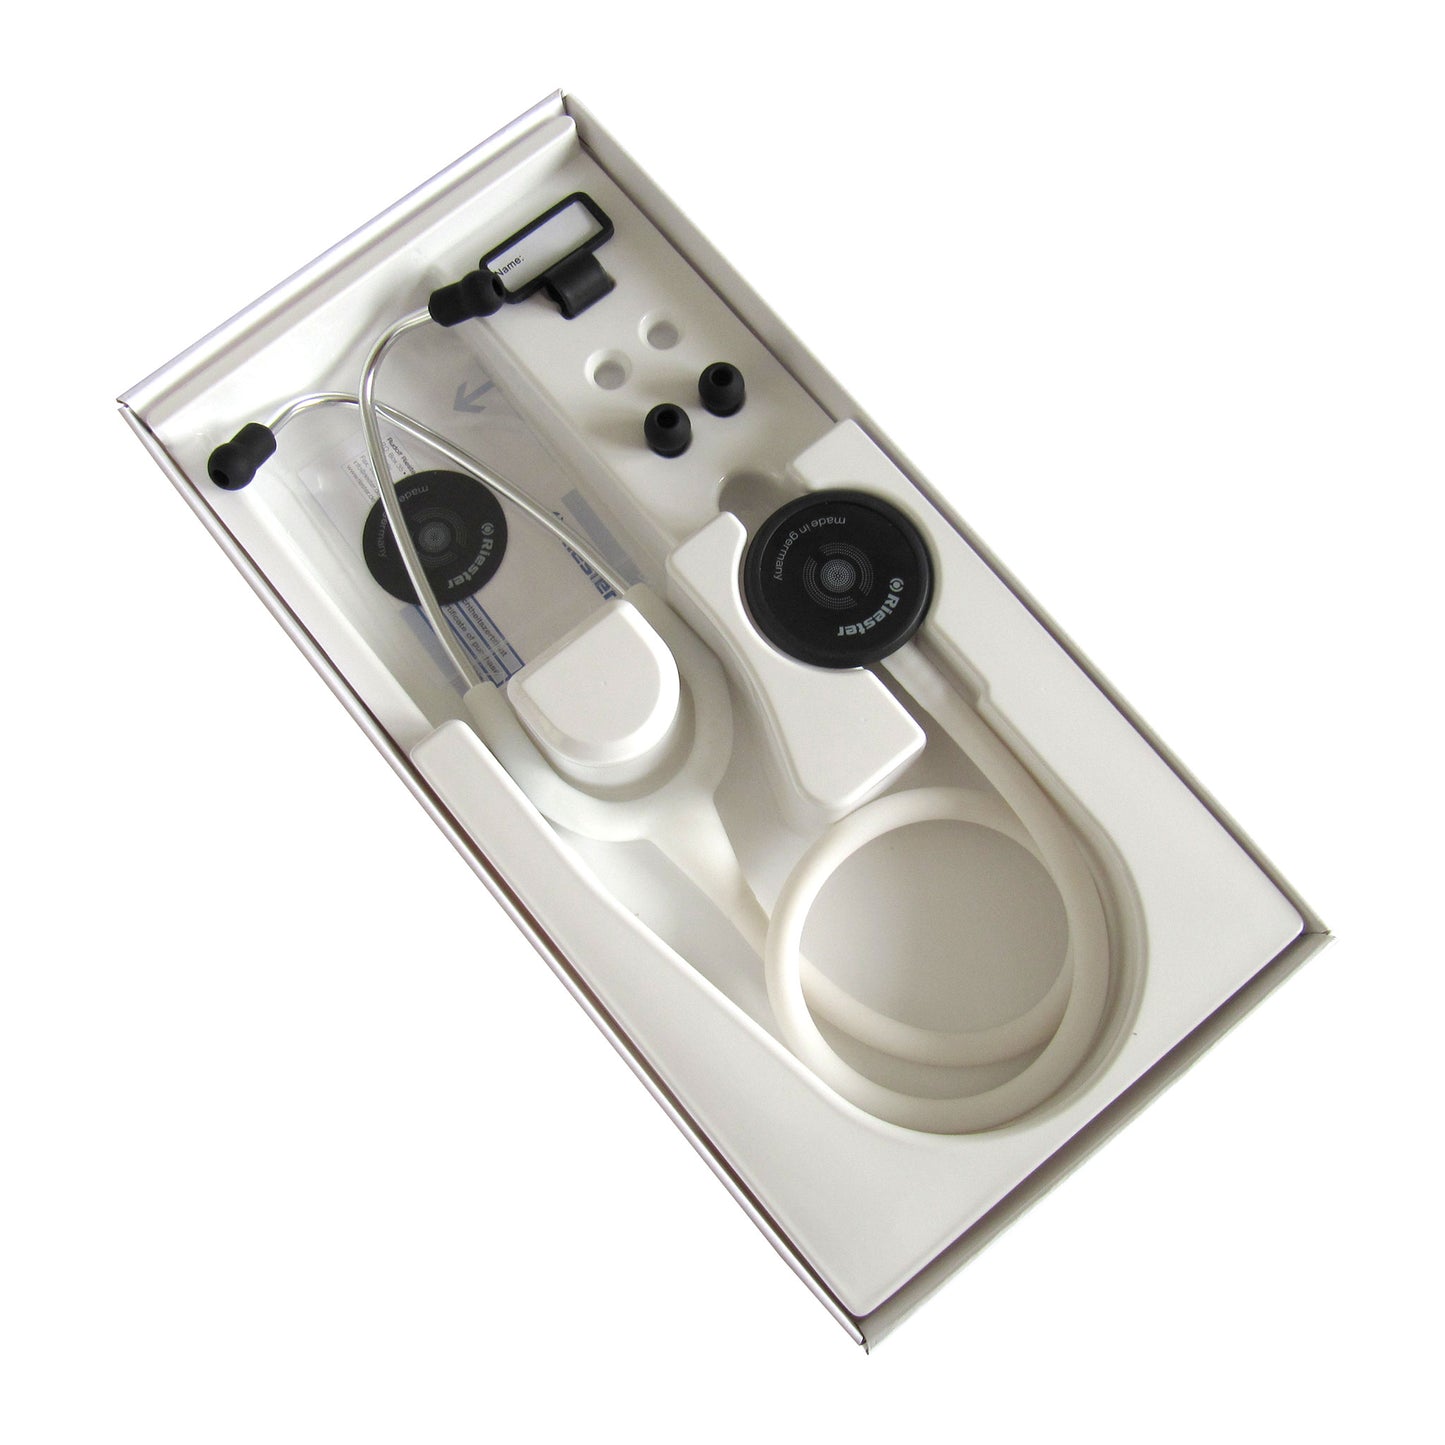 Riester Duplex 2.0 Dual-Head Stethoscope - White - 10 Year Warranty